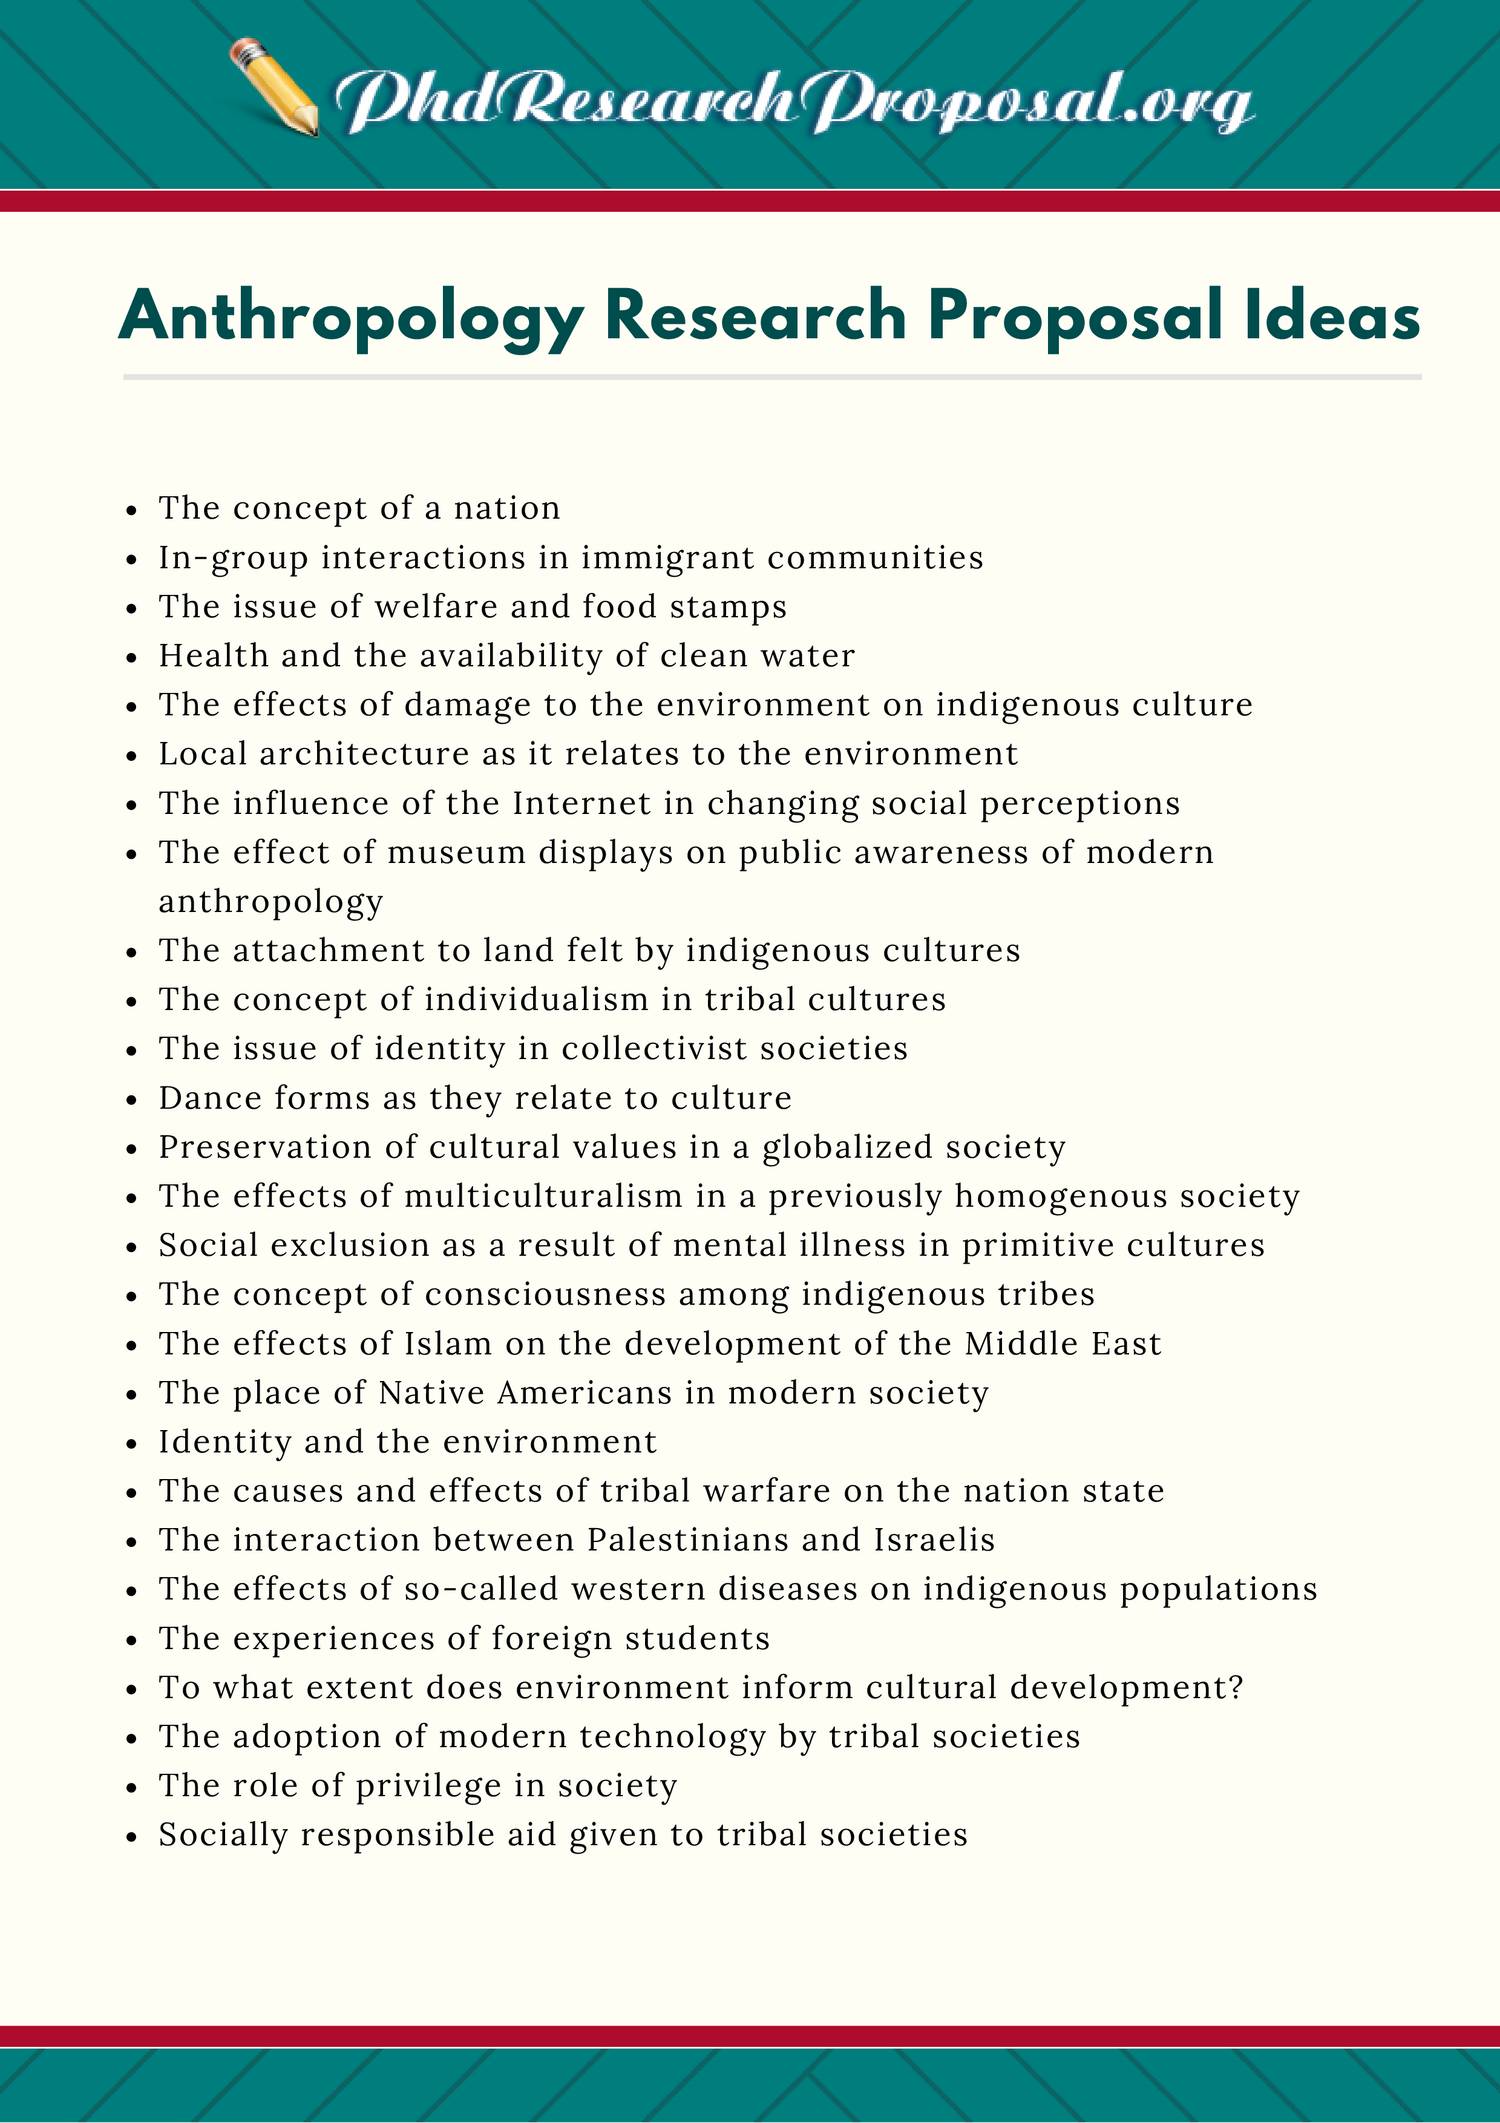 dissertation topics for anthropology